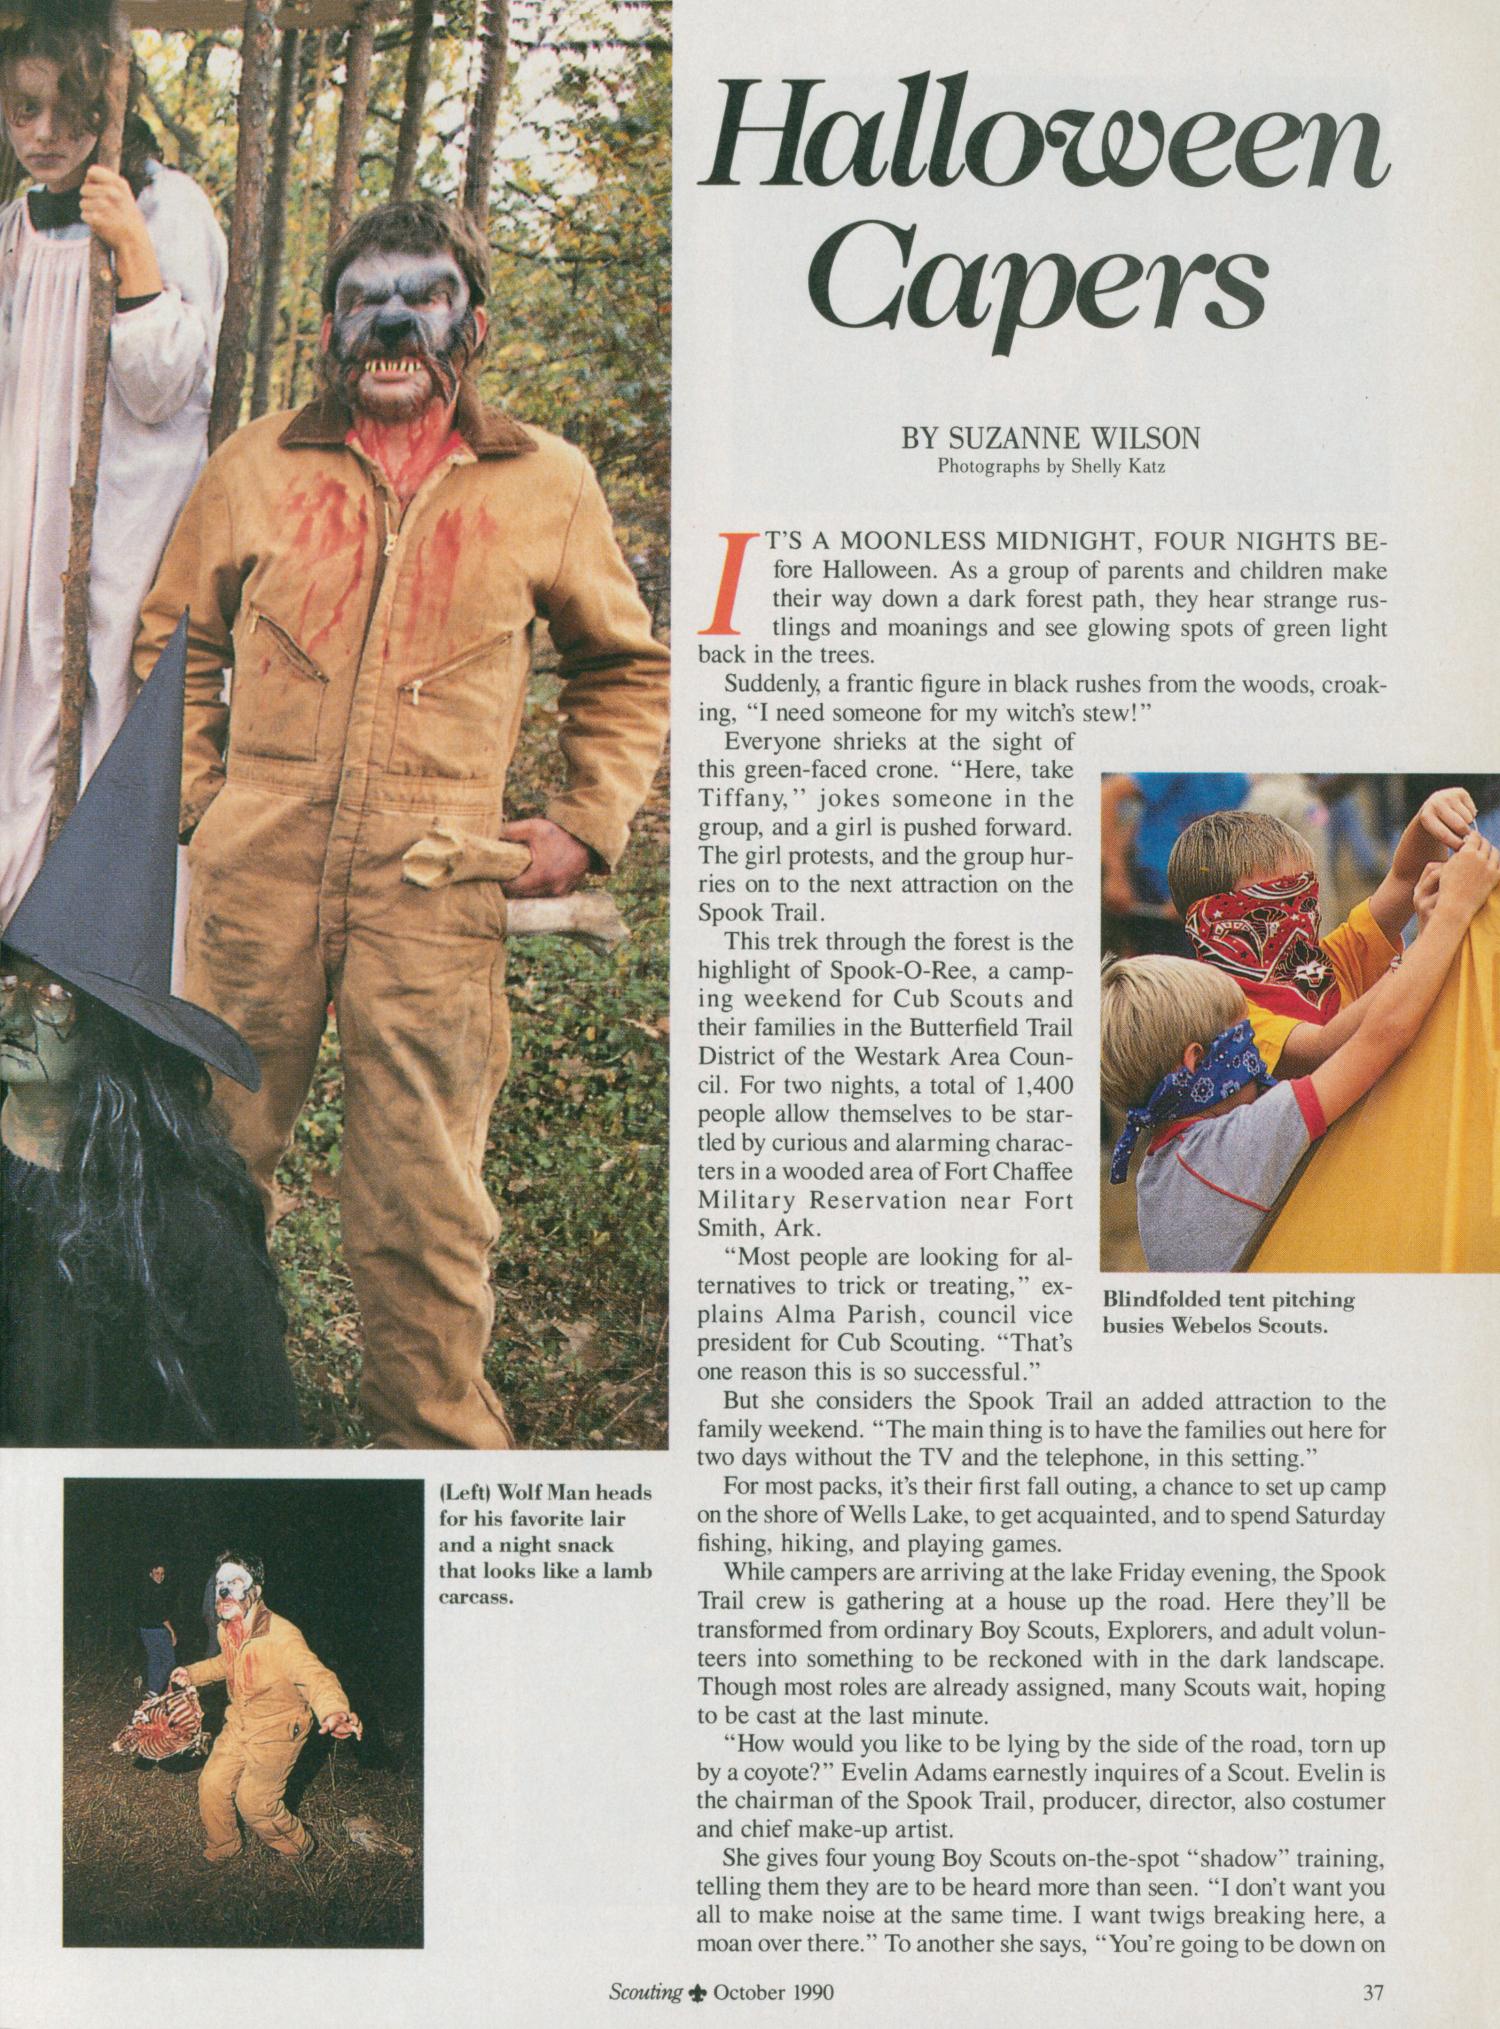 Scouting, Volume 78, Number 5, October 1990
                                                
                                                    37
                                                